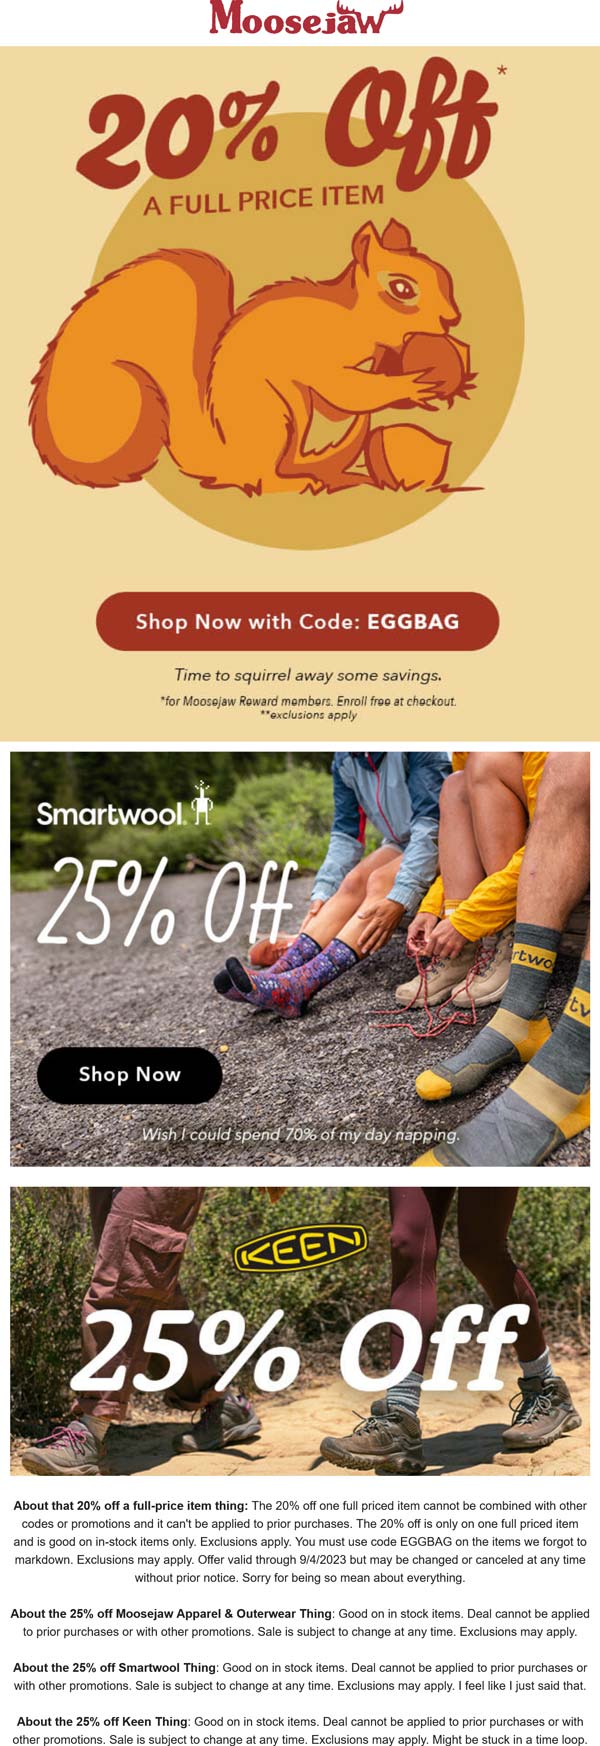 Moosejaw stores Coupon  20% off a single item at Moosejaw via promo code EGGBAG #moosejaw 